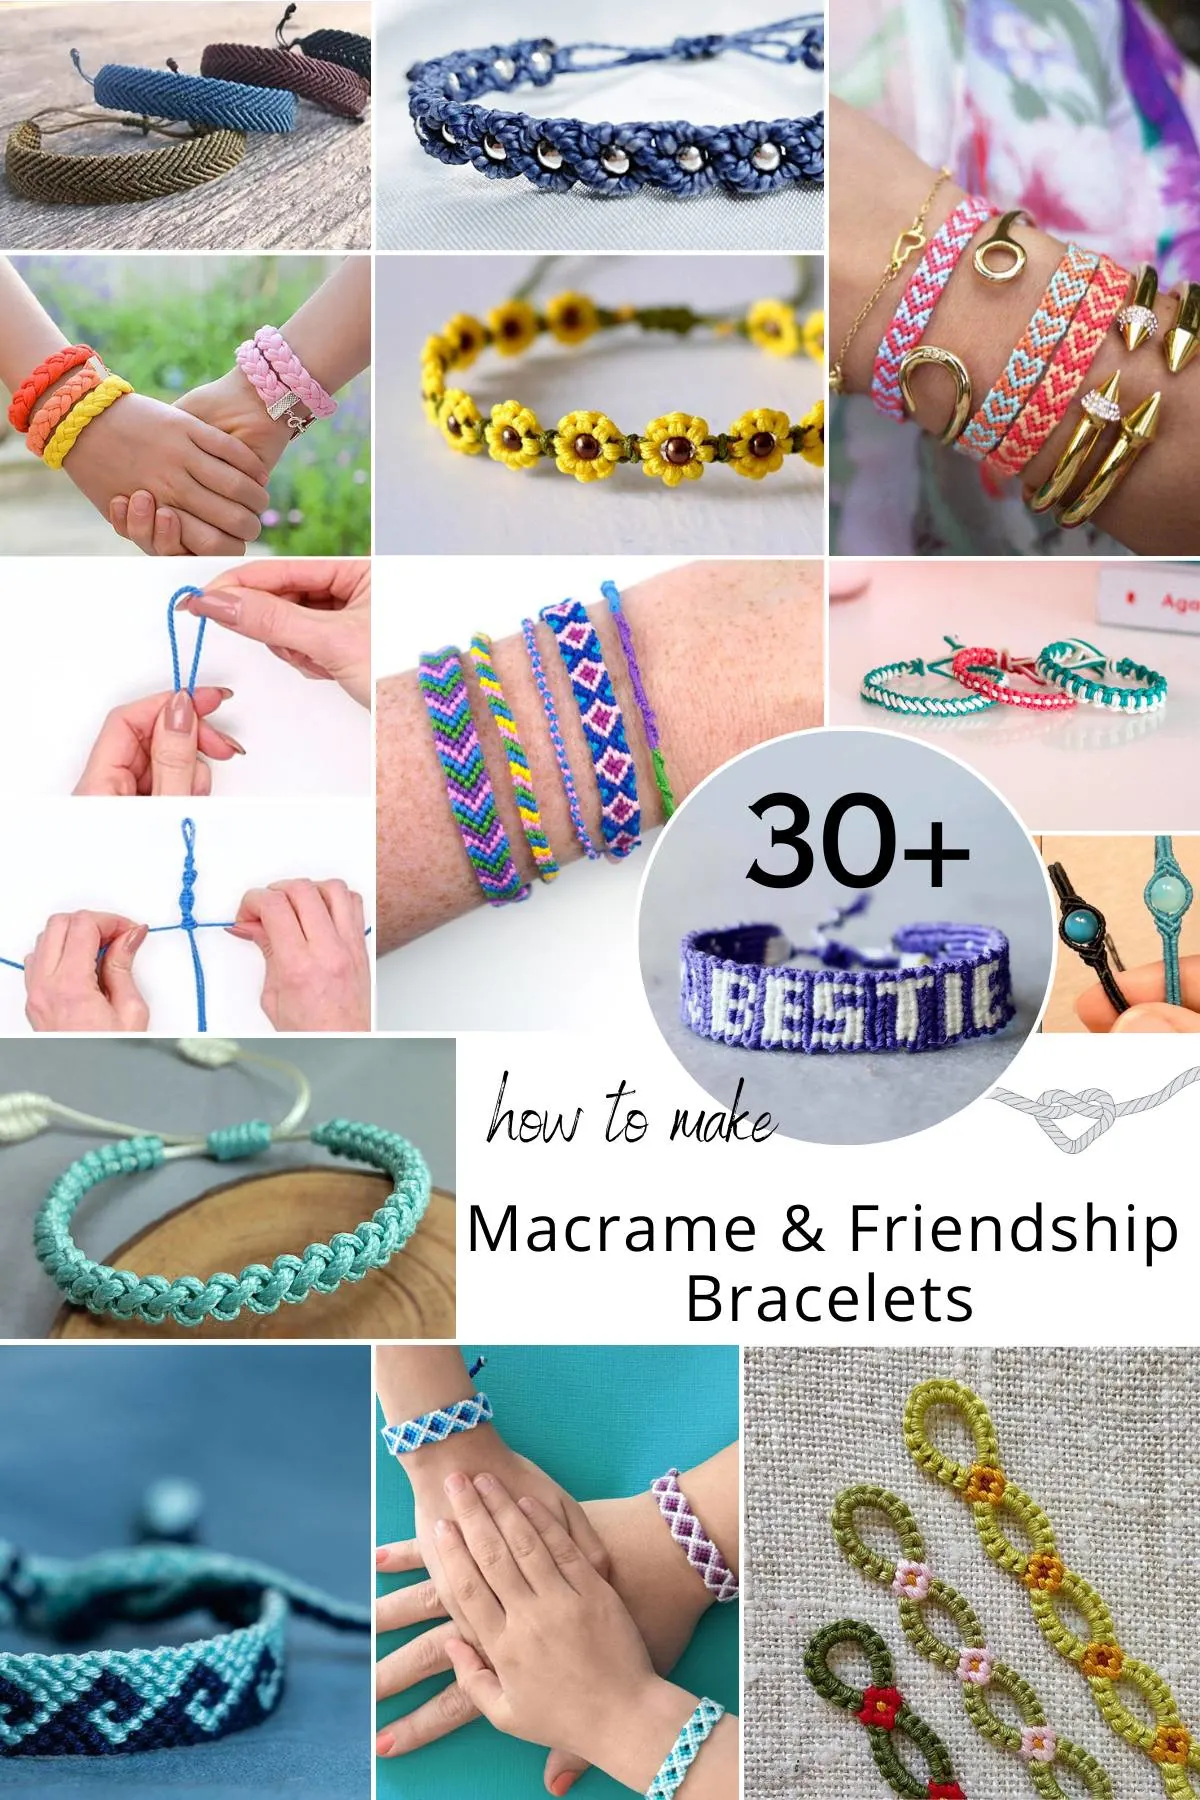 Friendship/name Bracelet Crochet Yarn, how to make a Heart! - YouTube